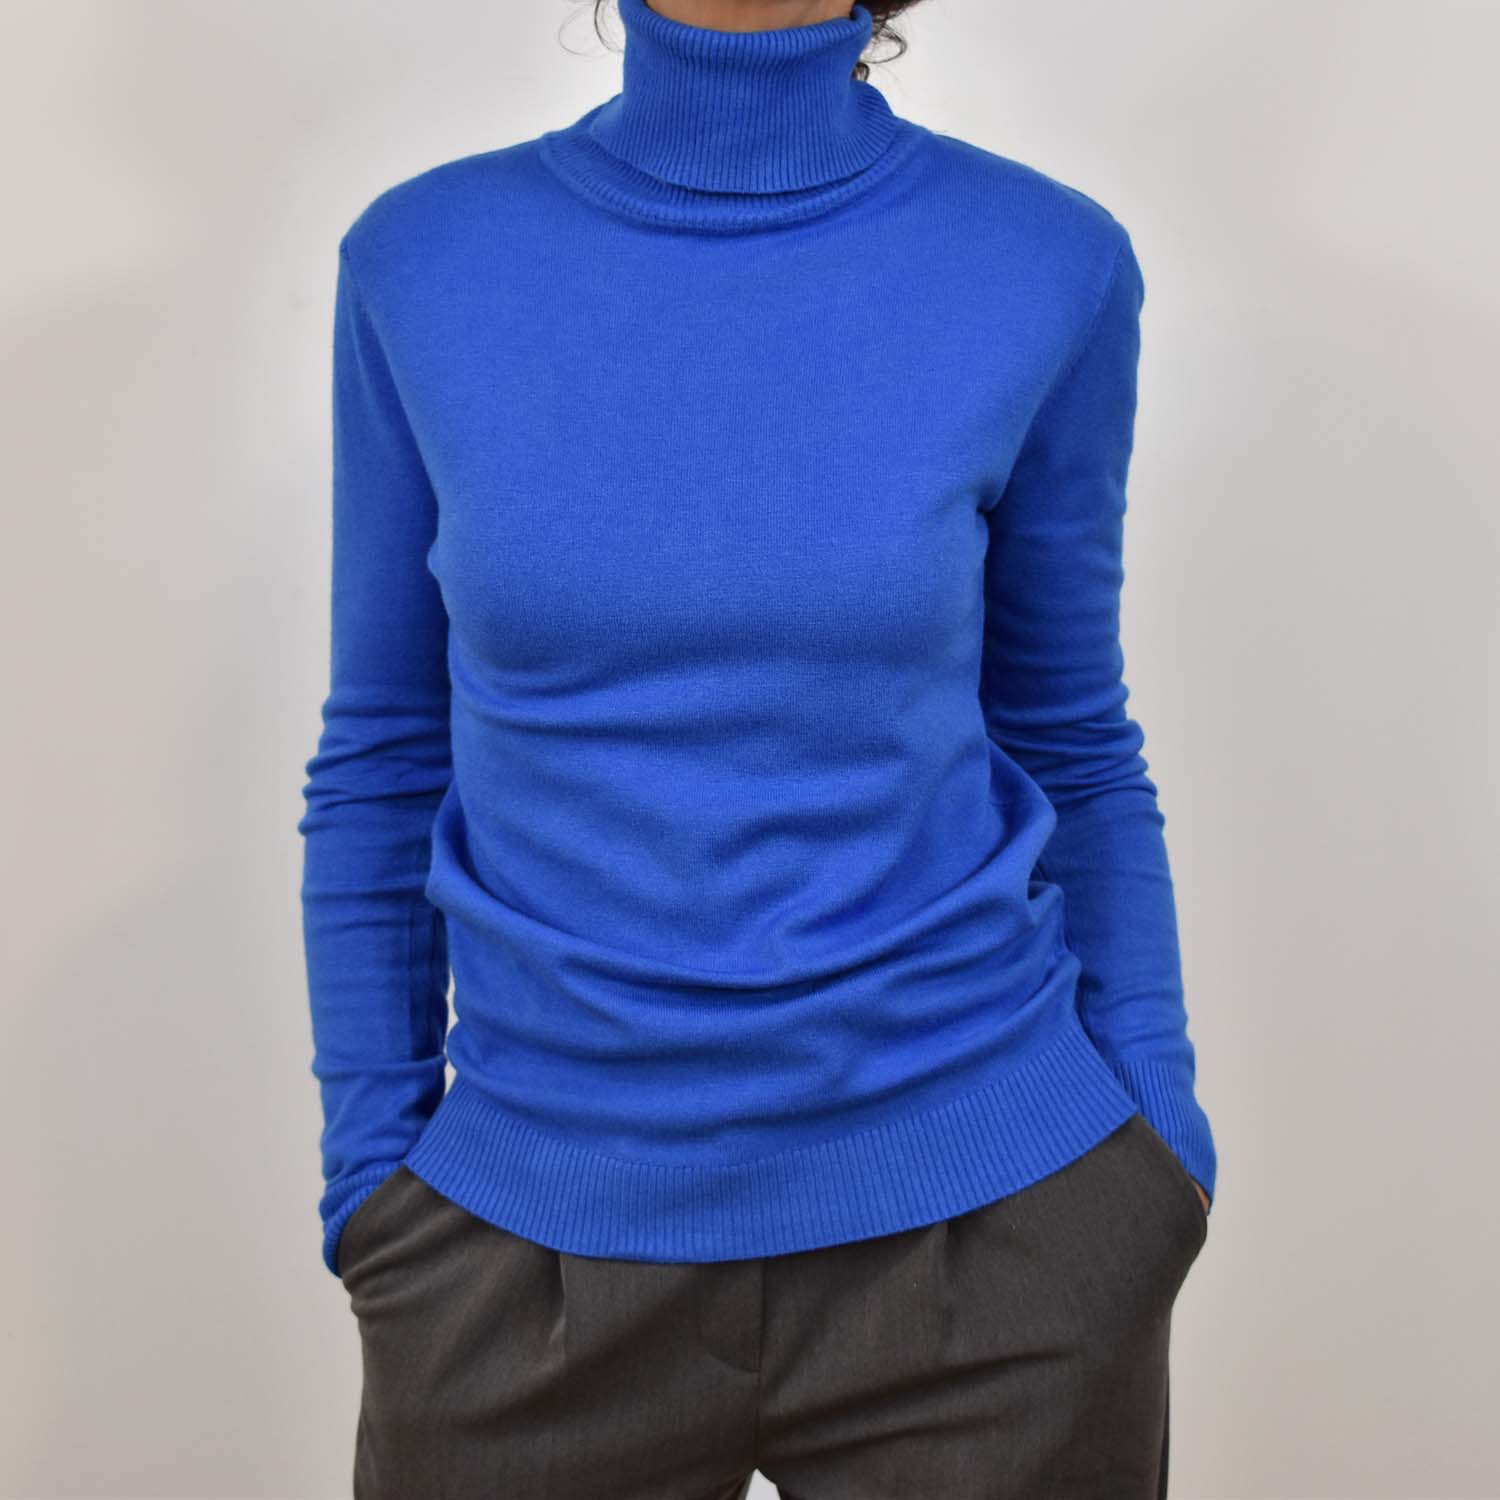 Blue turtleneck sweater